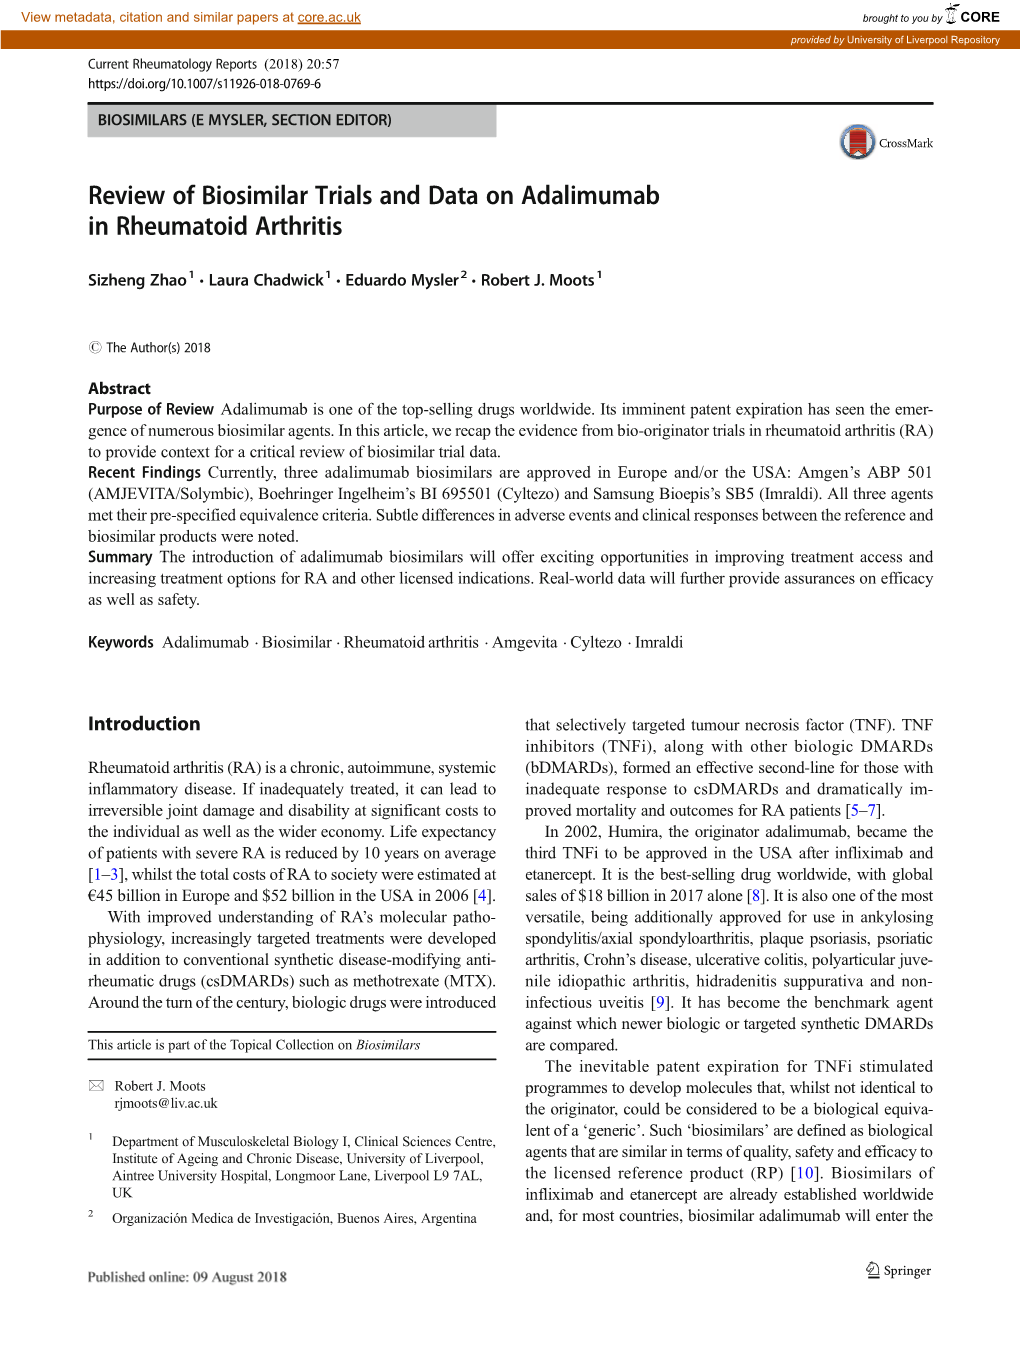 Review of Biosimilar Trials and Data on Adalimumab in Rheumatoid Arthritis